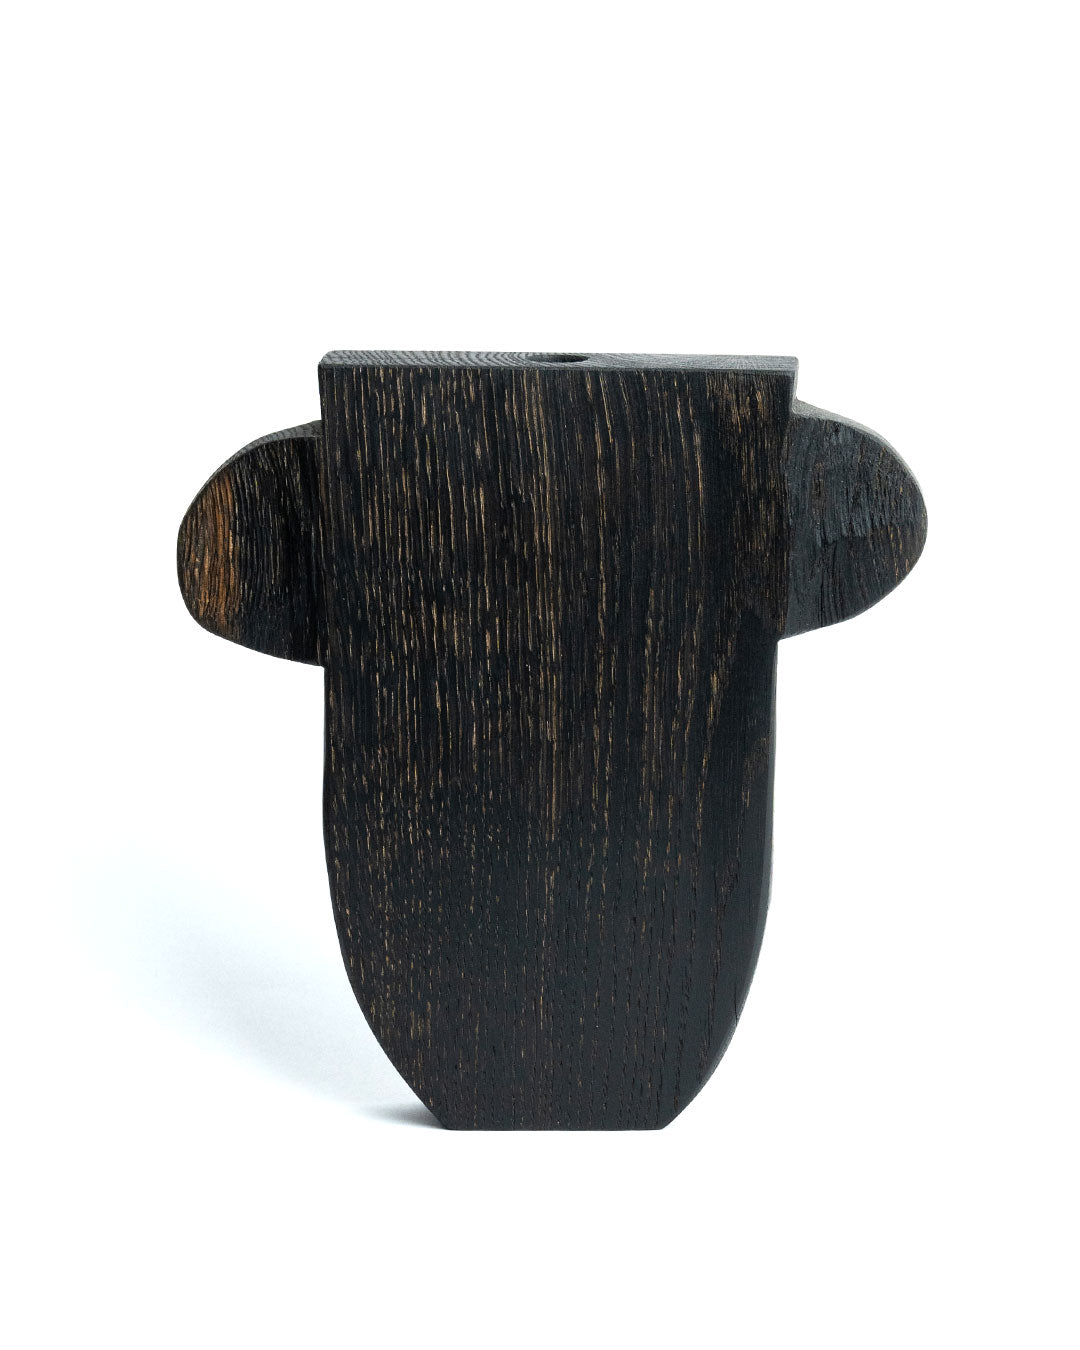 Ear Textured Wood Vase